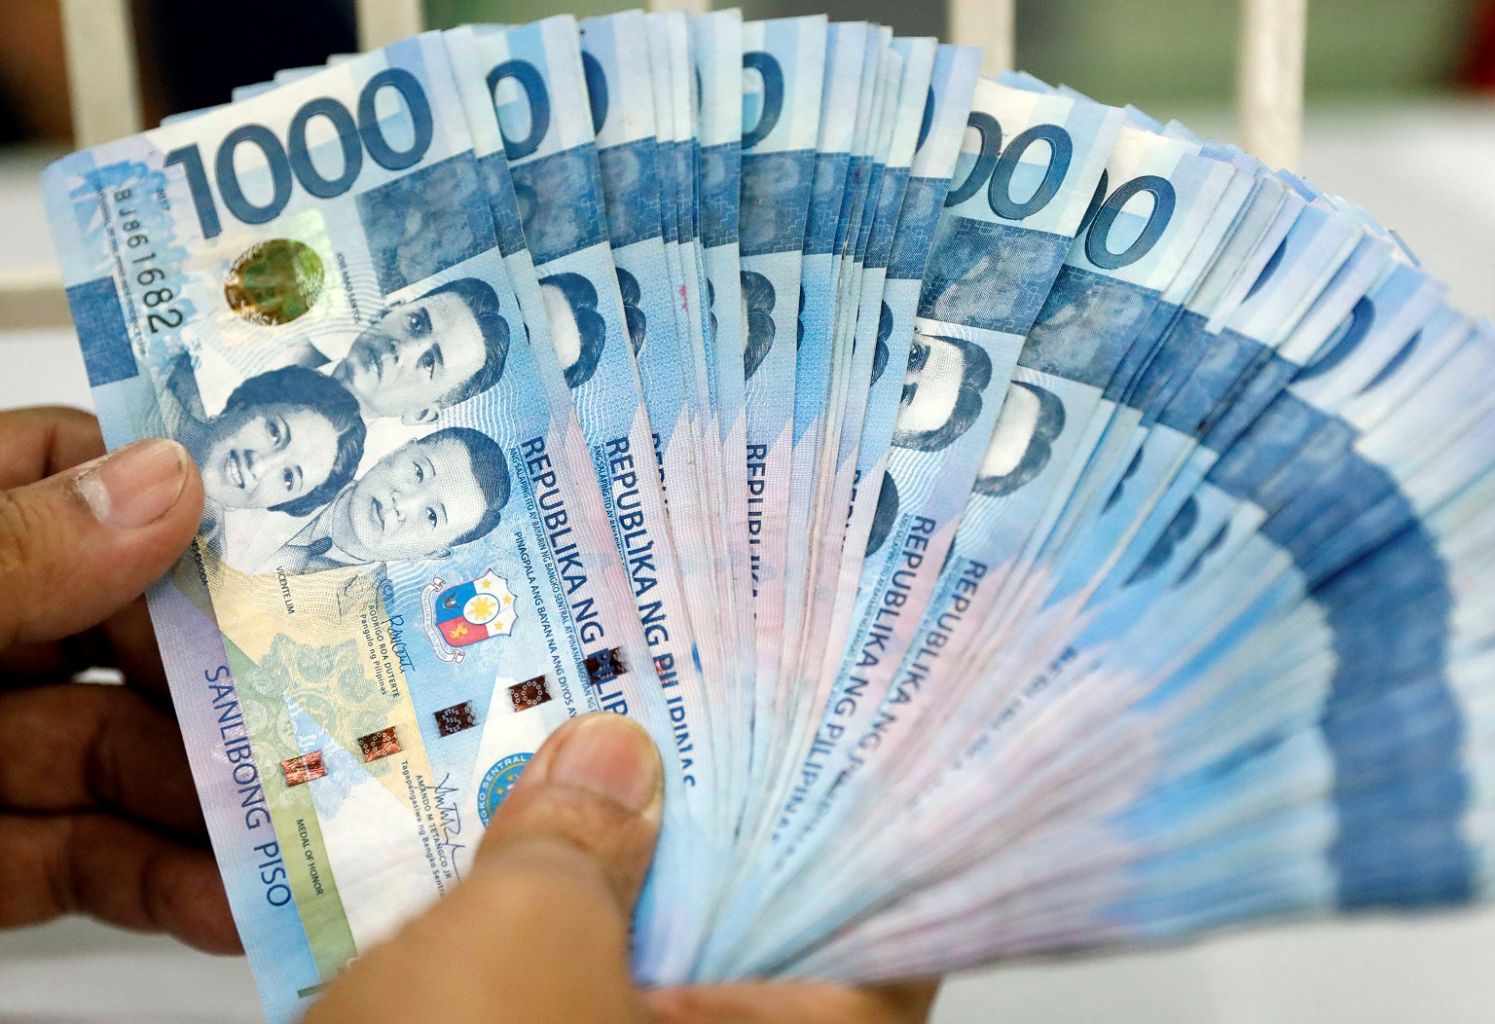 pesos to dollars chart 2022